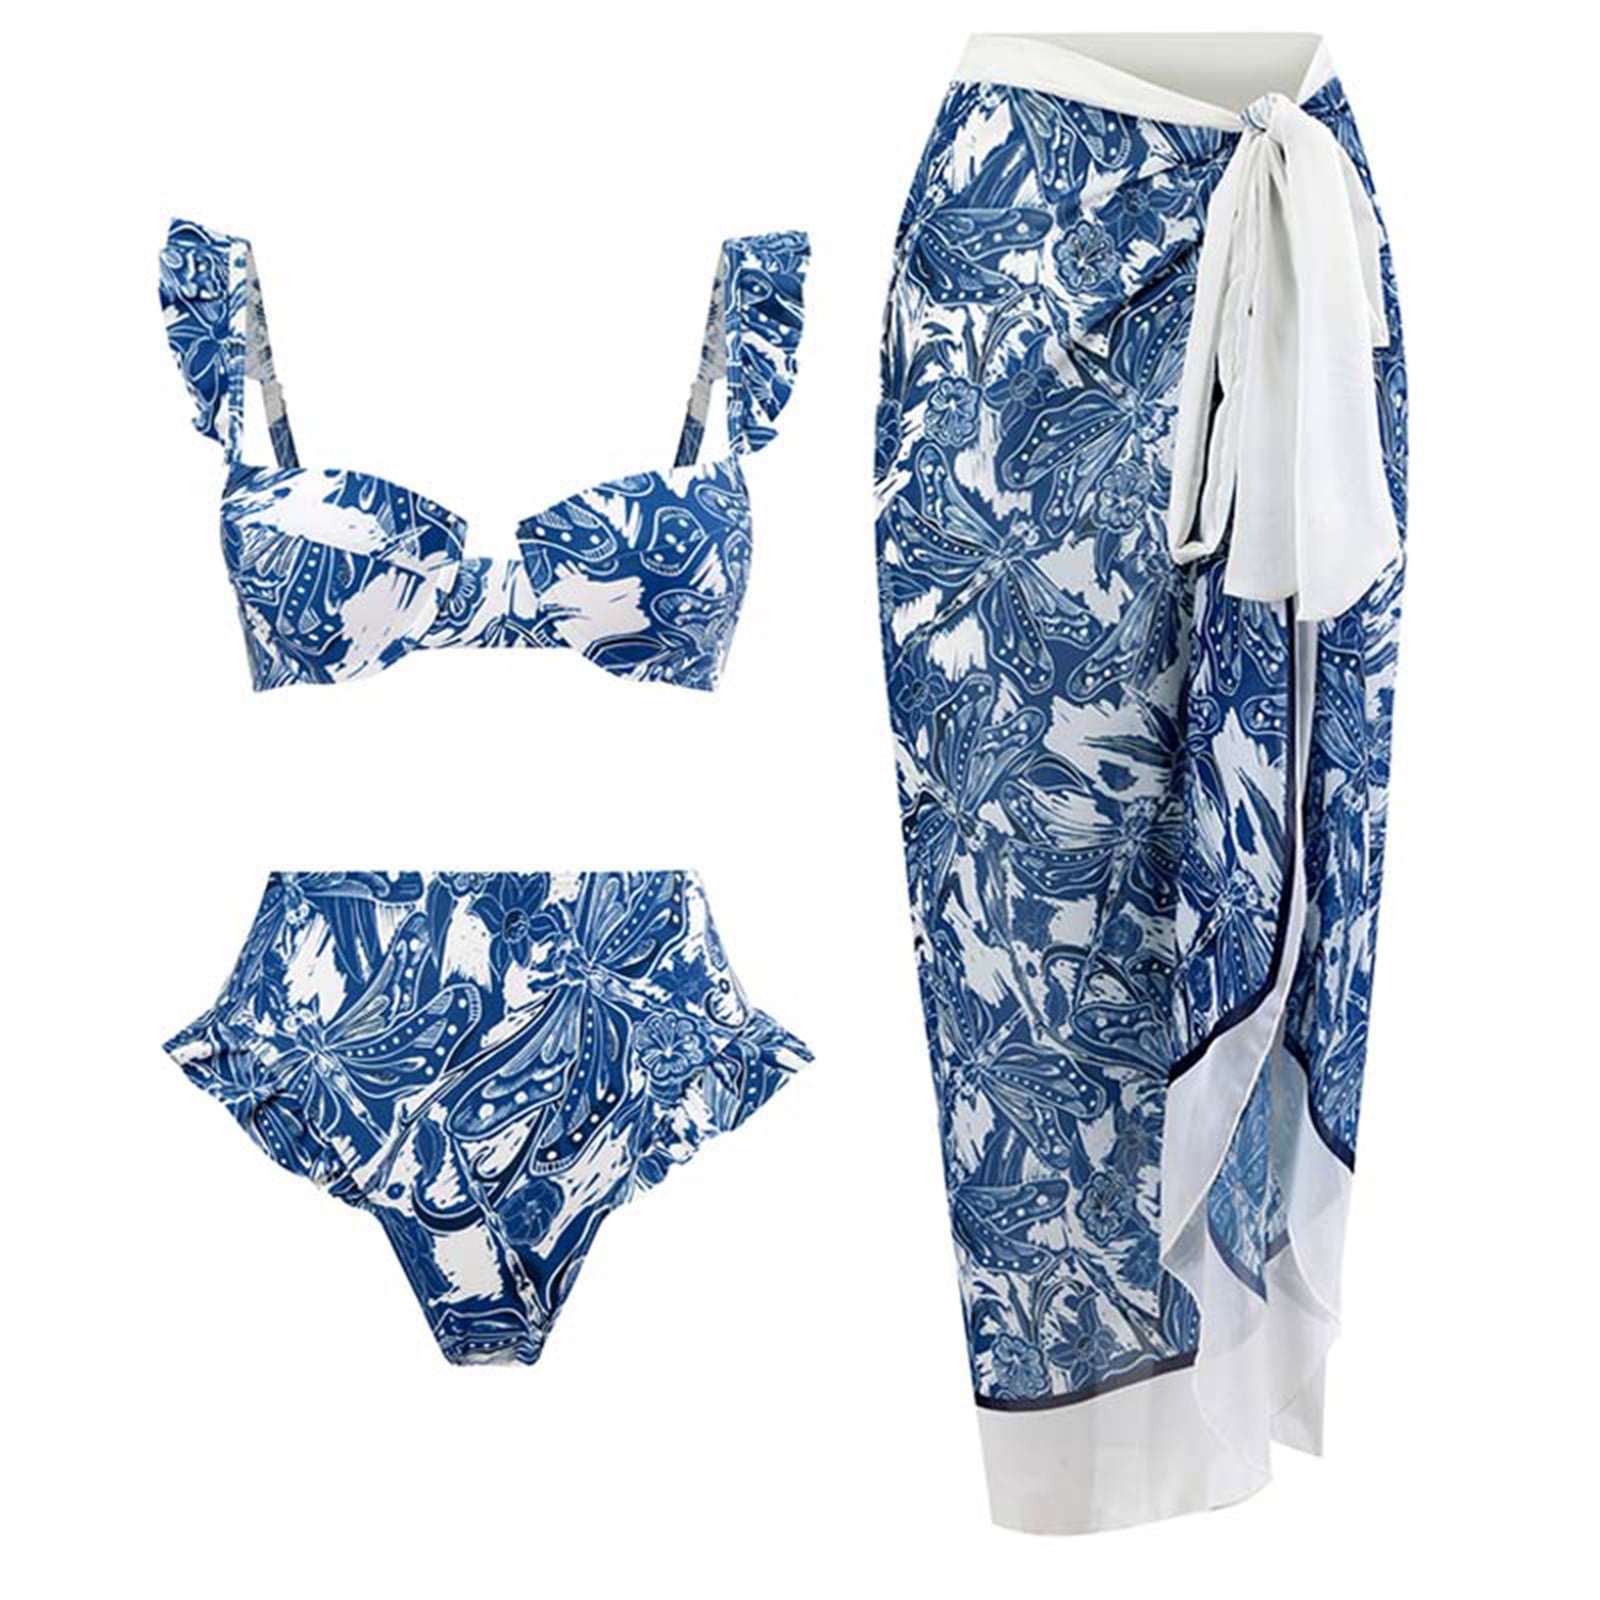 Fpqtro Swimsuit Women Bikinis Sets Ladies Fashion Retro Flower Print ...